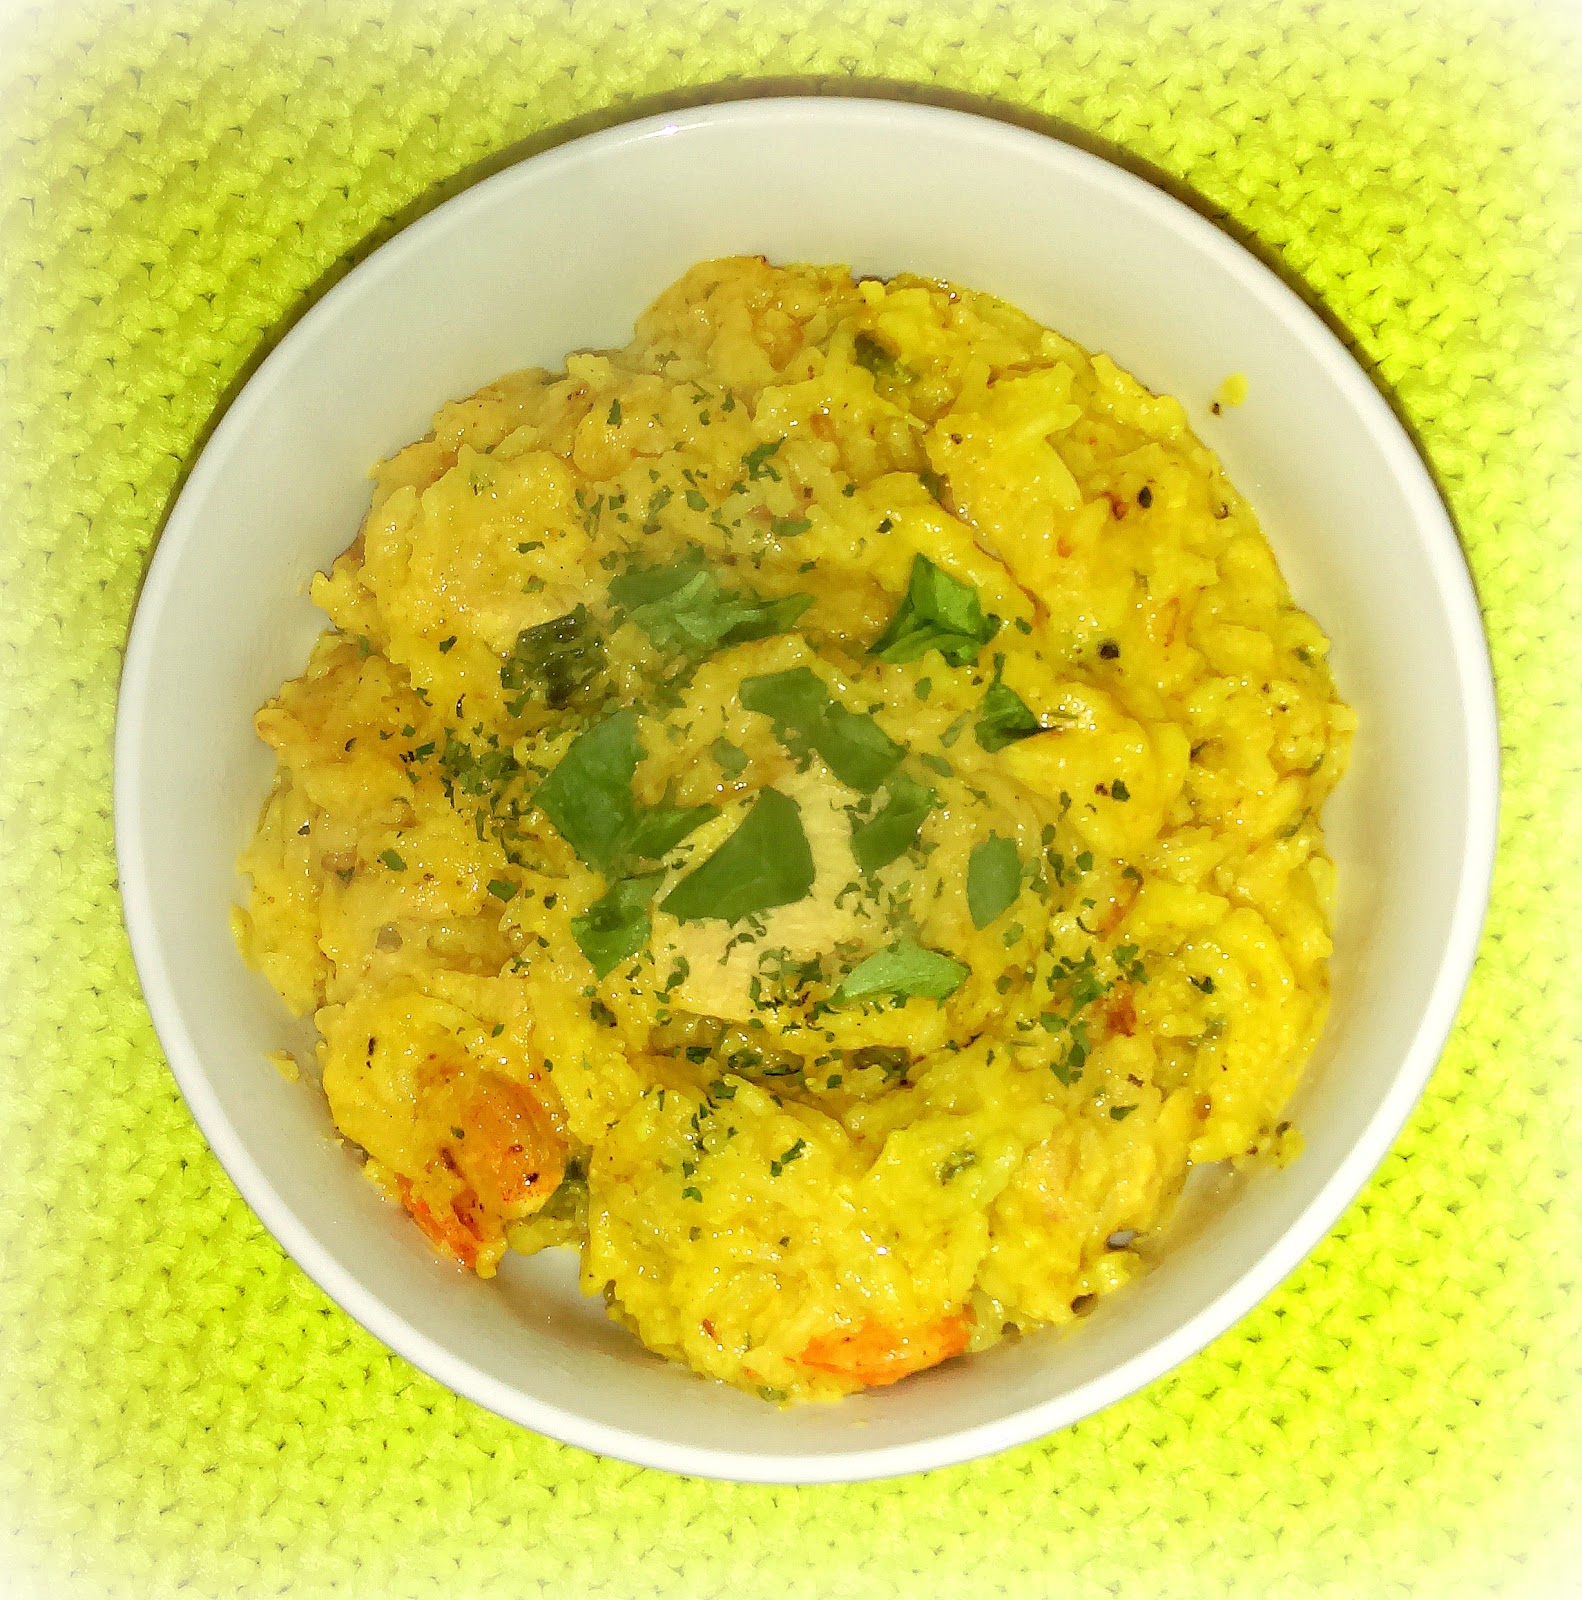 Leftover creamy curry risotto